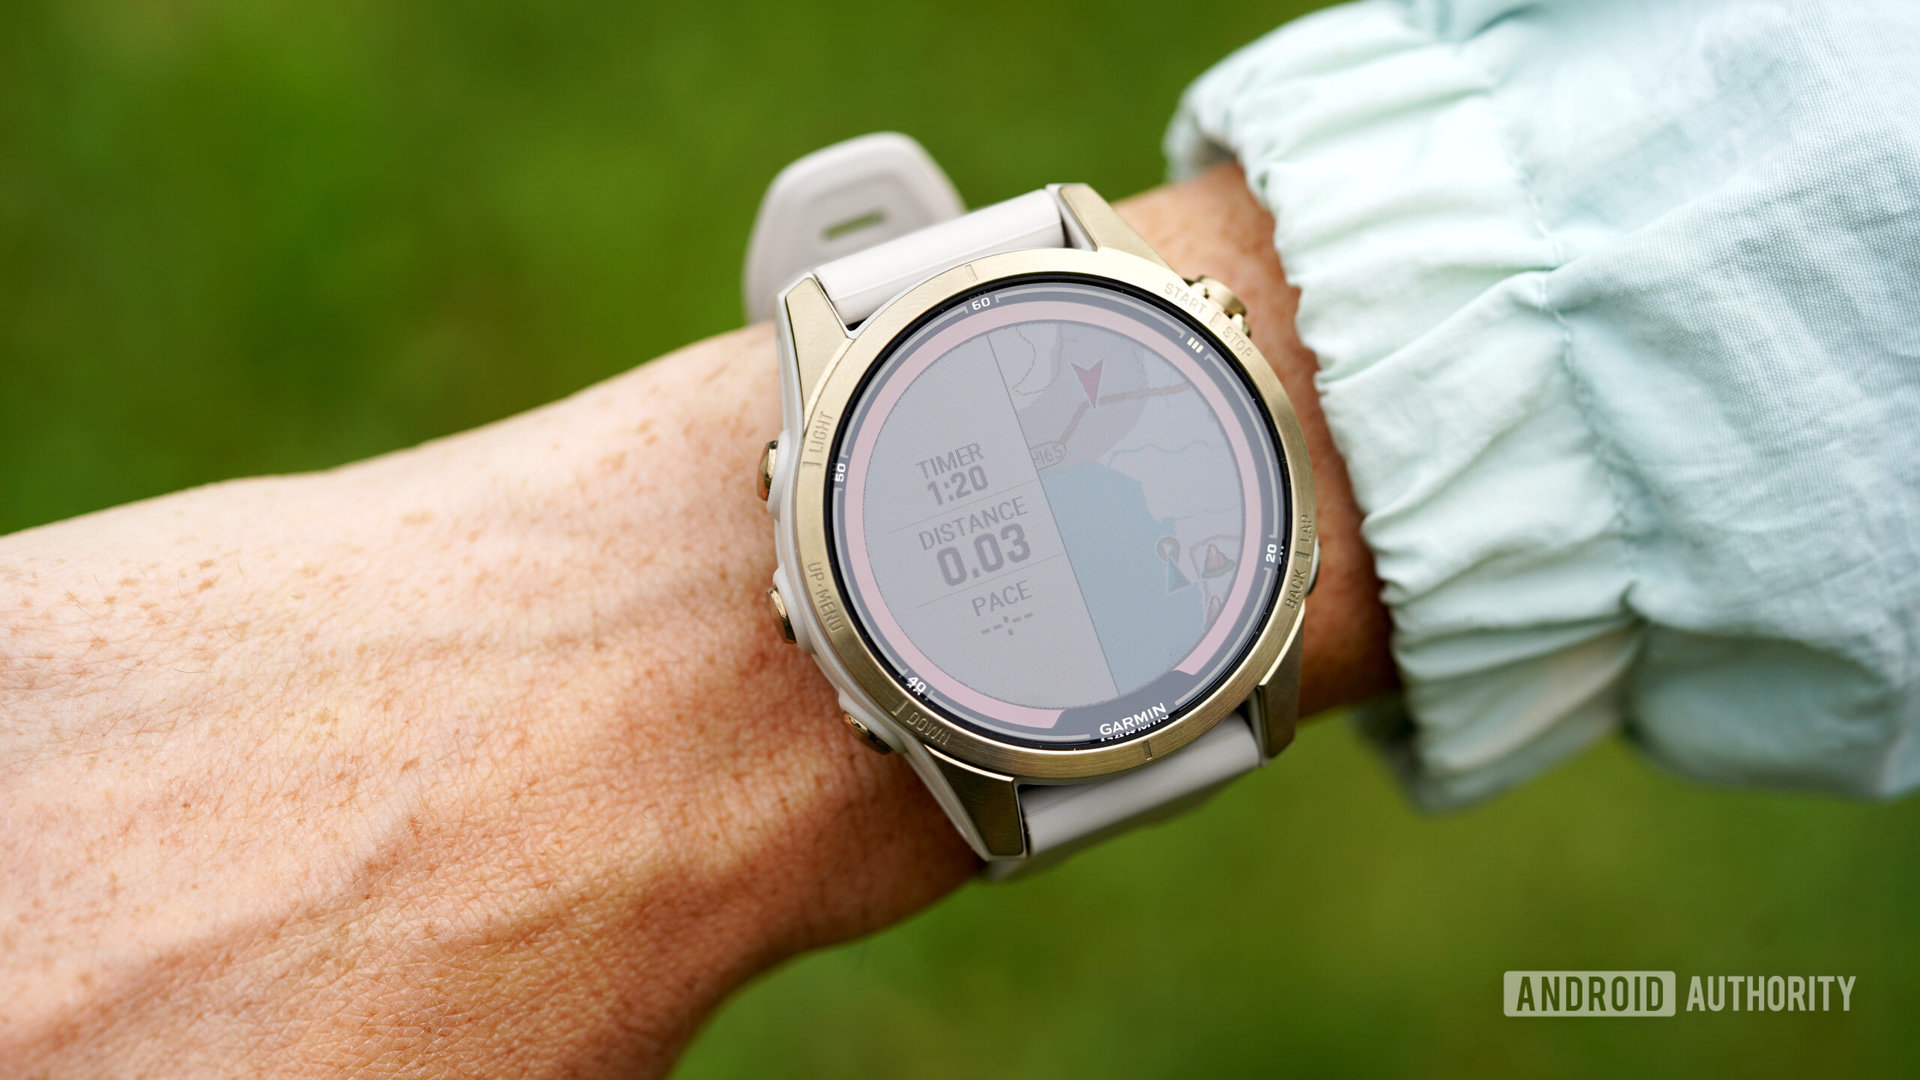 A Garmin watch displays split screen maps